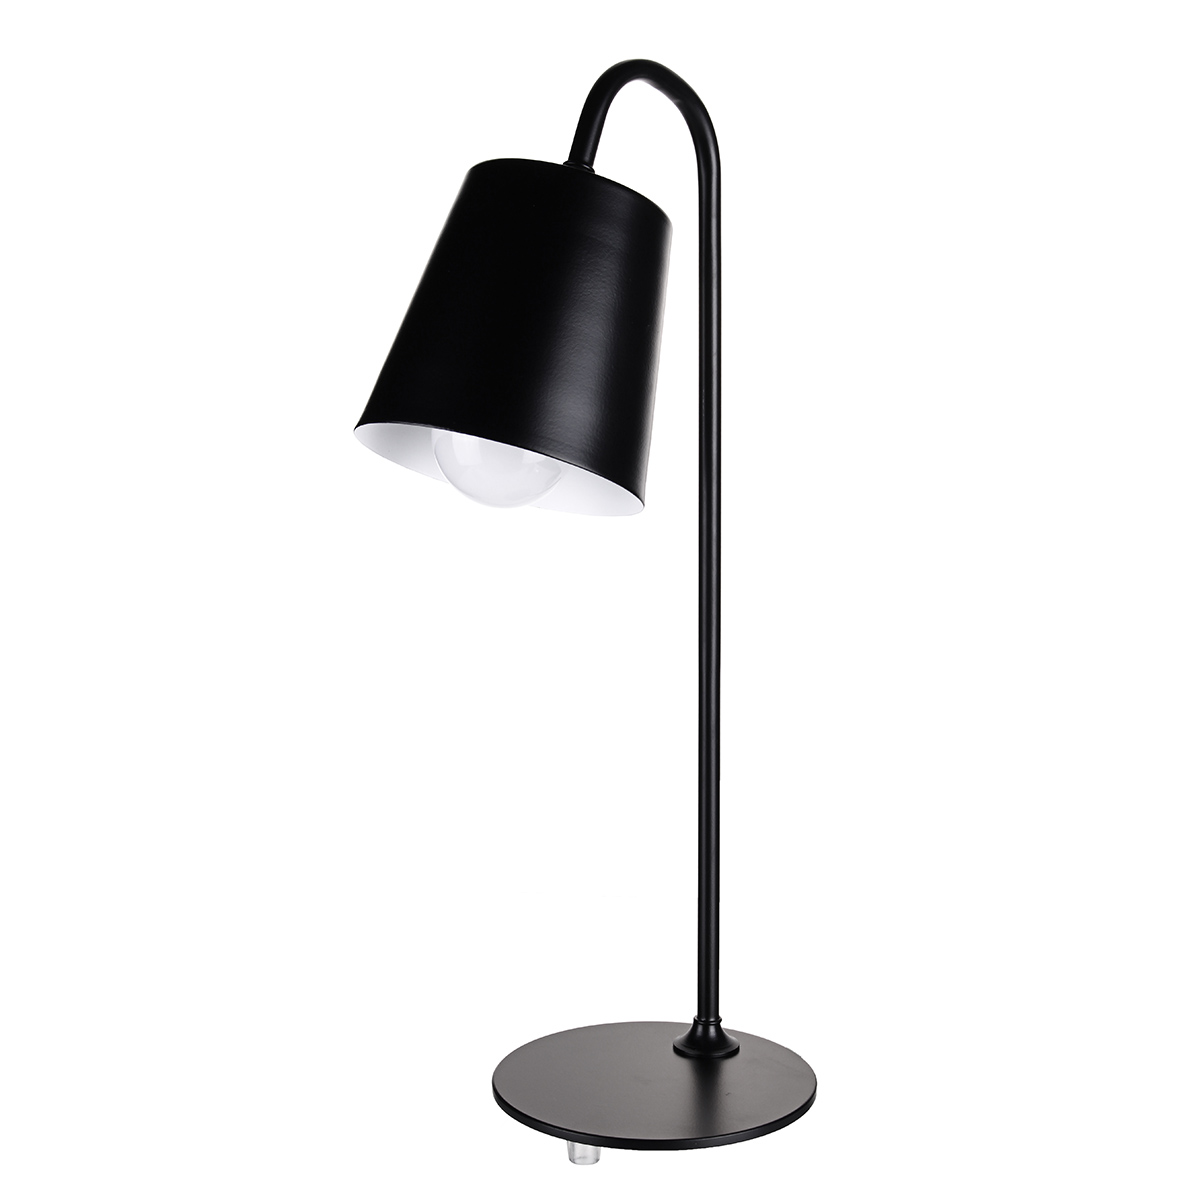 Nordic-Metal-Table-Lamp-Bedside-Desk-Lamp-Kids-Bedroom-Study-Night-Light-1353635-9